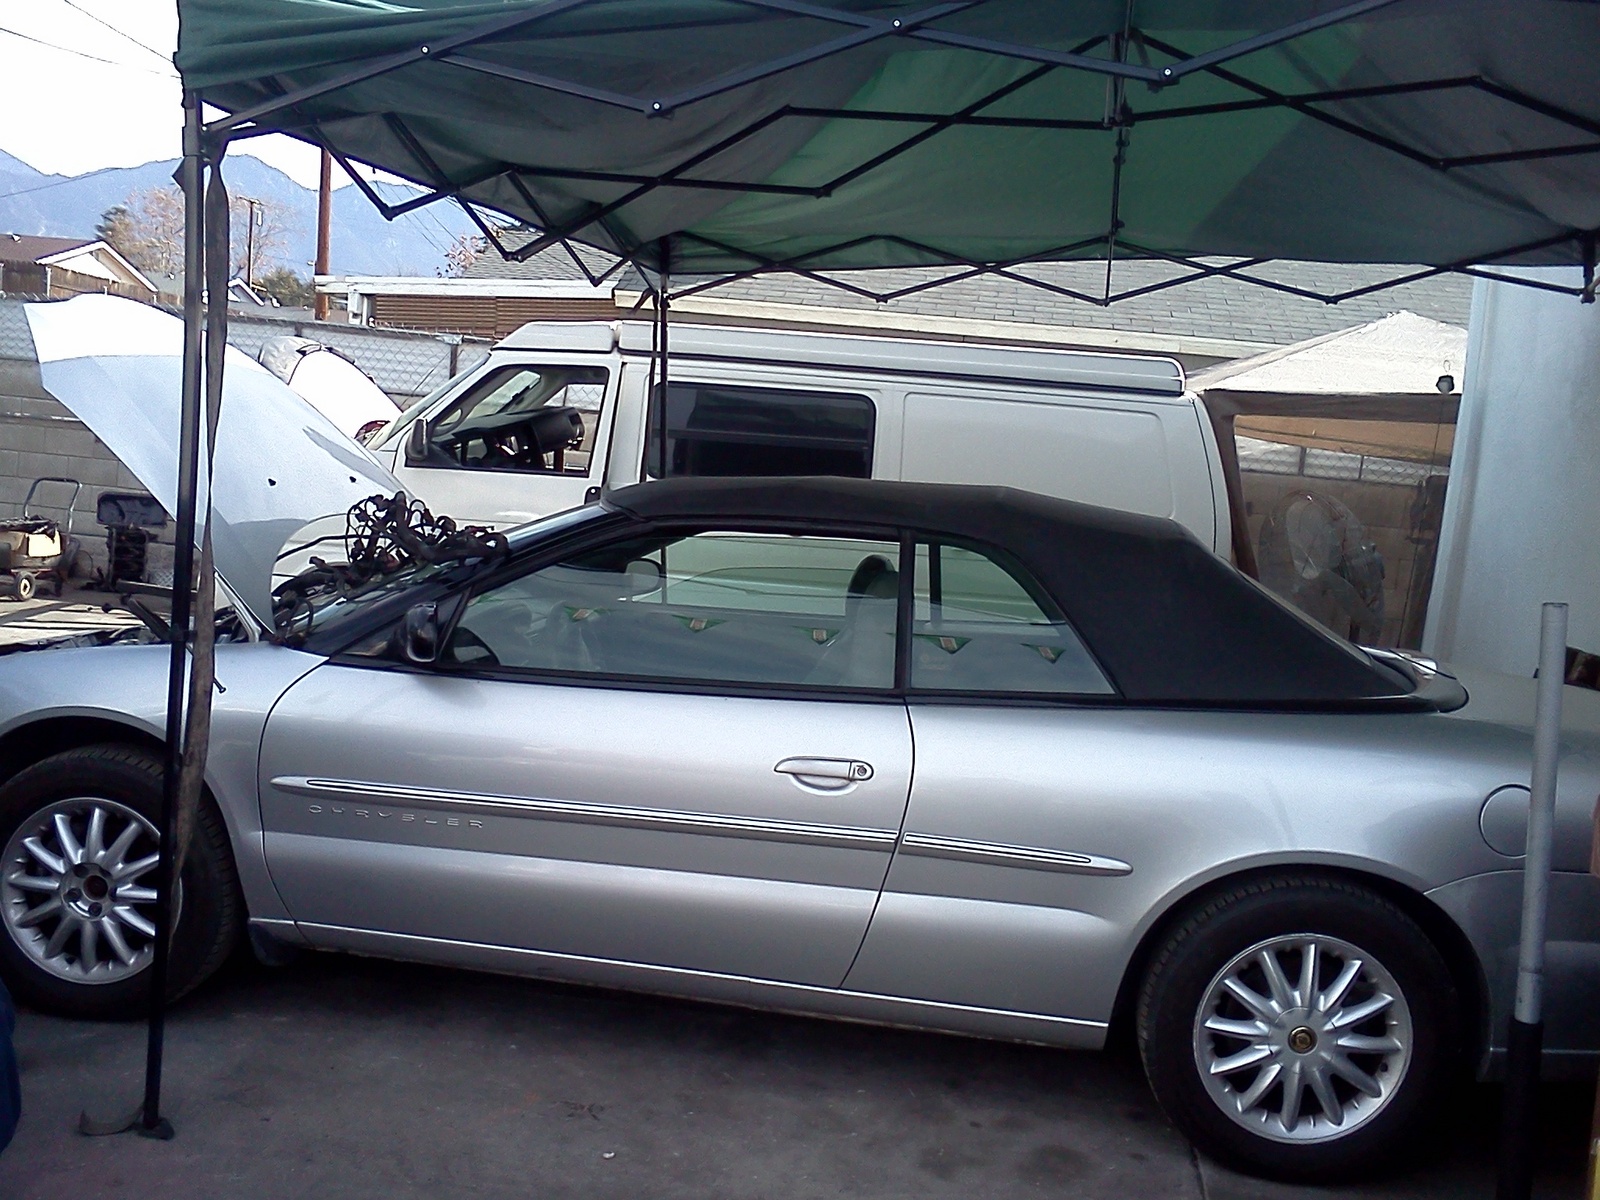 2001 Chrysler sebring problem